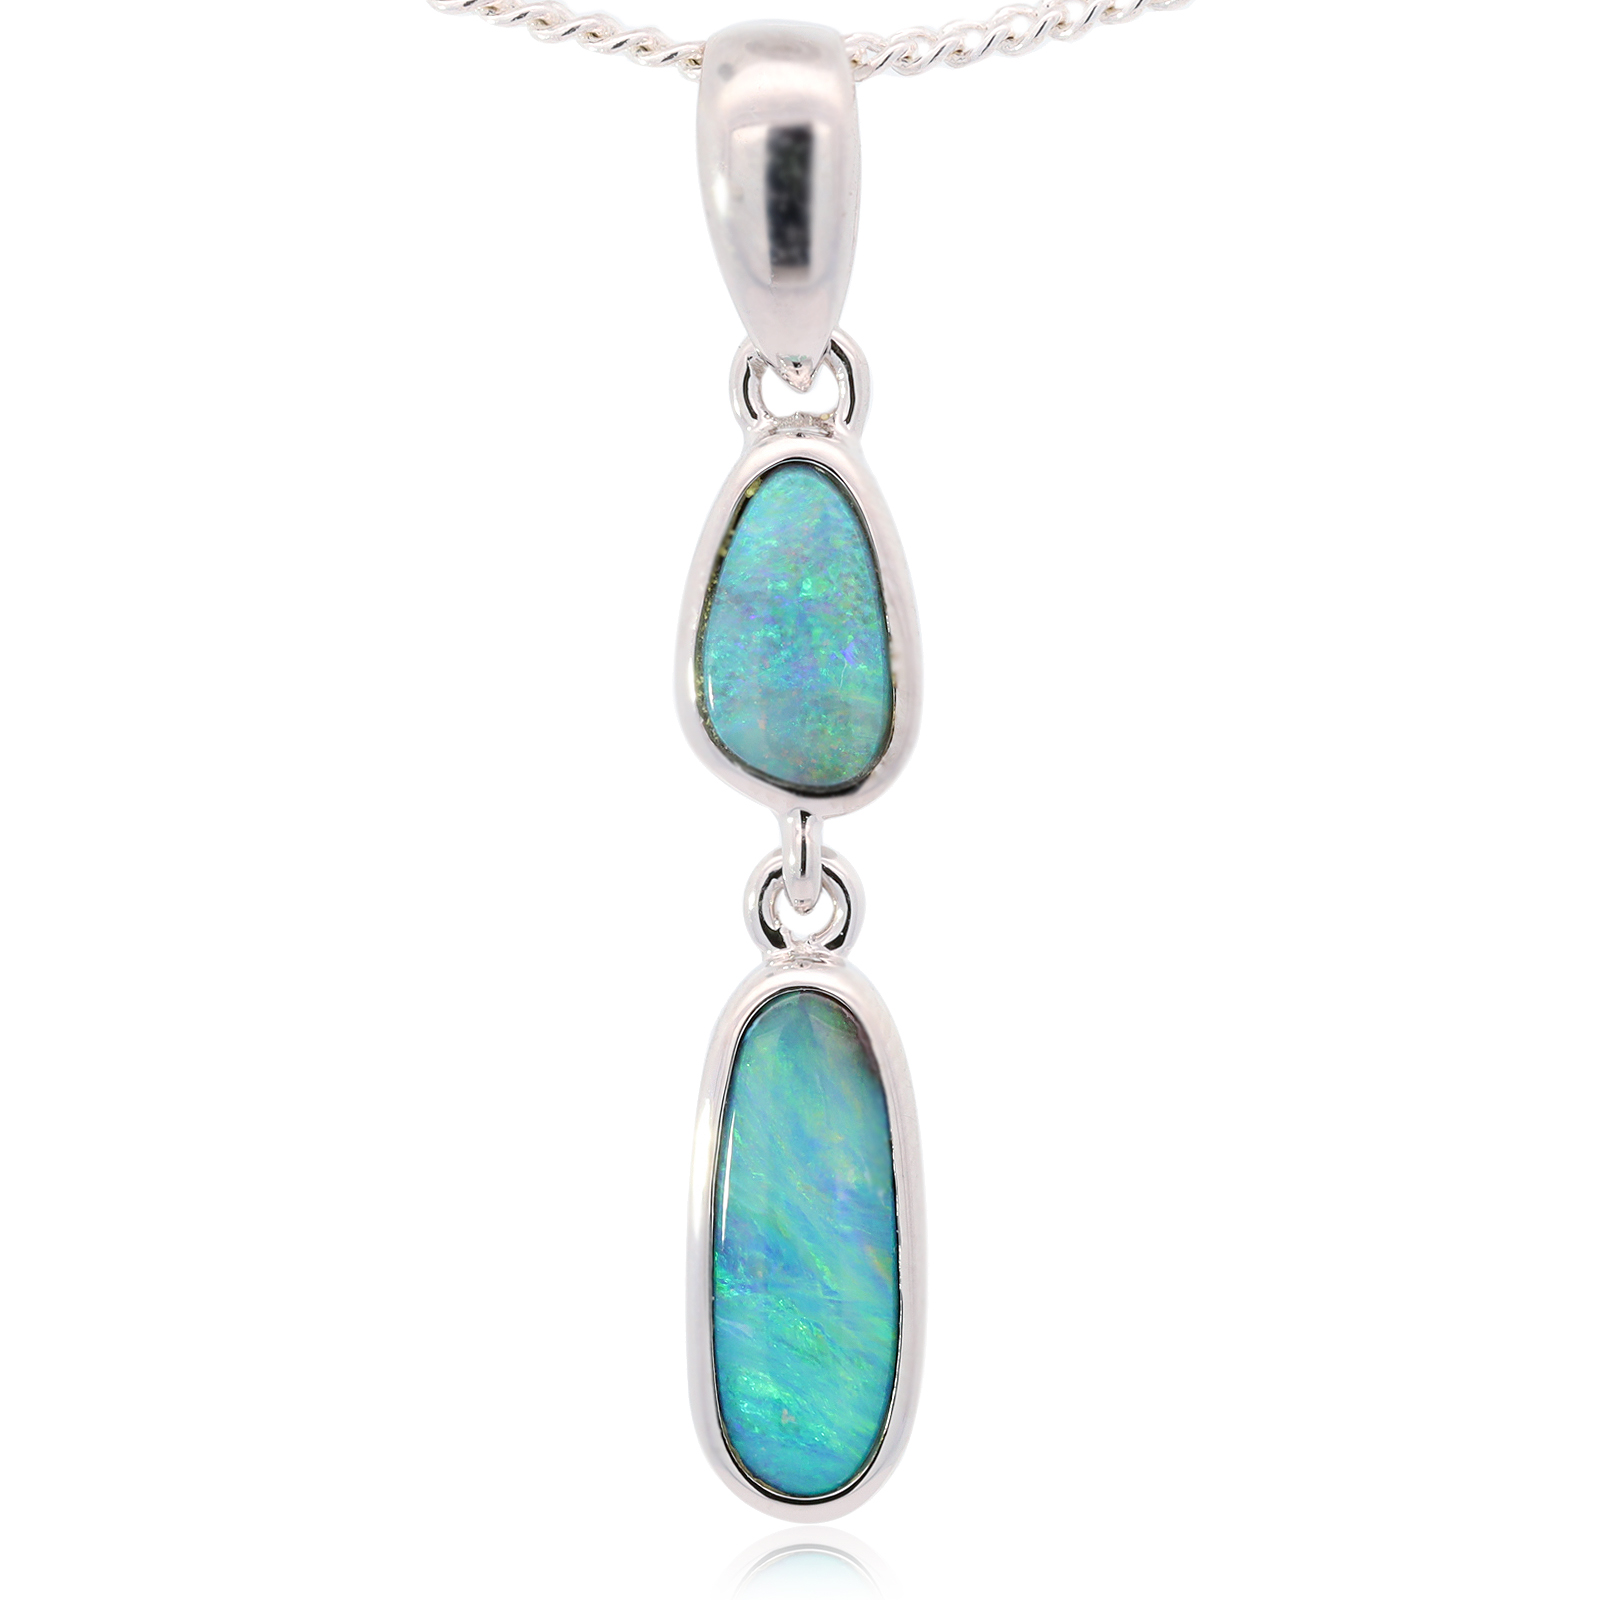 Sterling Silver Blue Green Solid Australian Boulder Opal Necklace Pendant